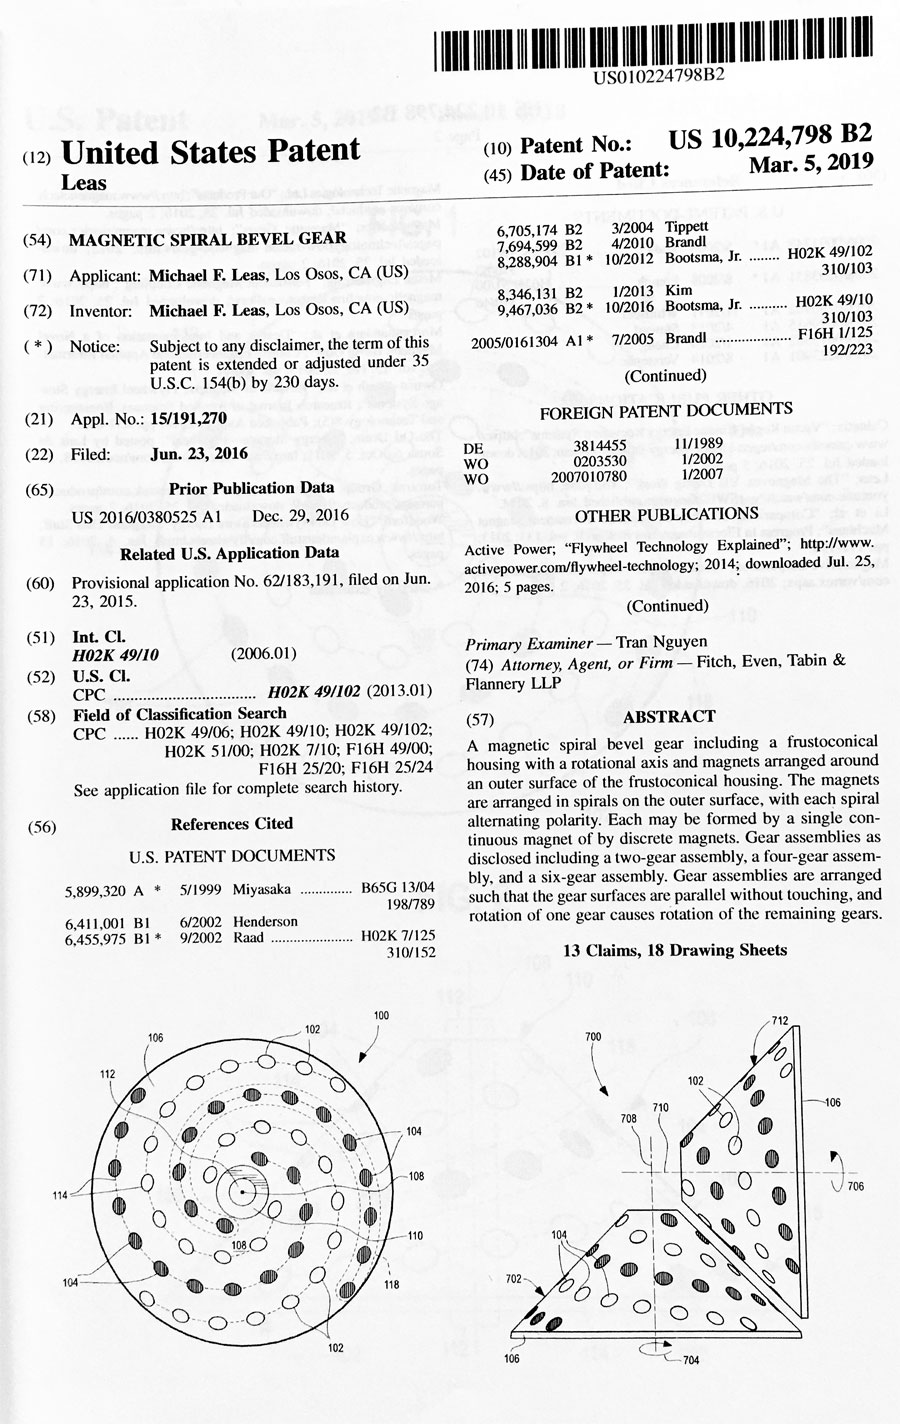 Michael-Leas-Patent-US-No-10224798-B2-03-05-19